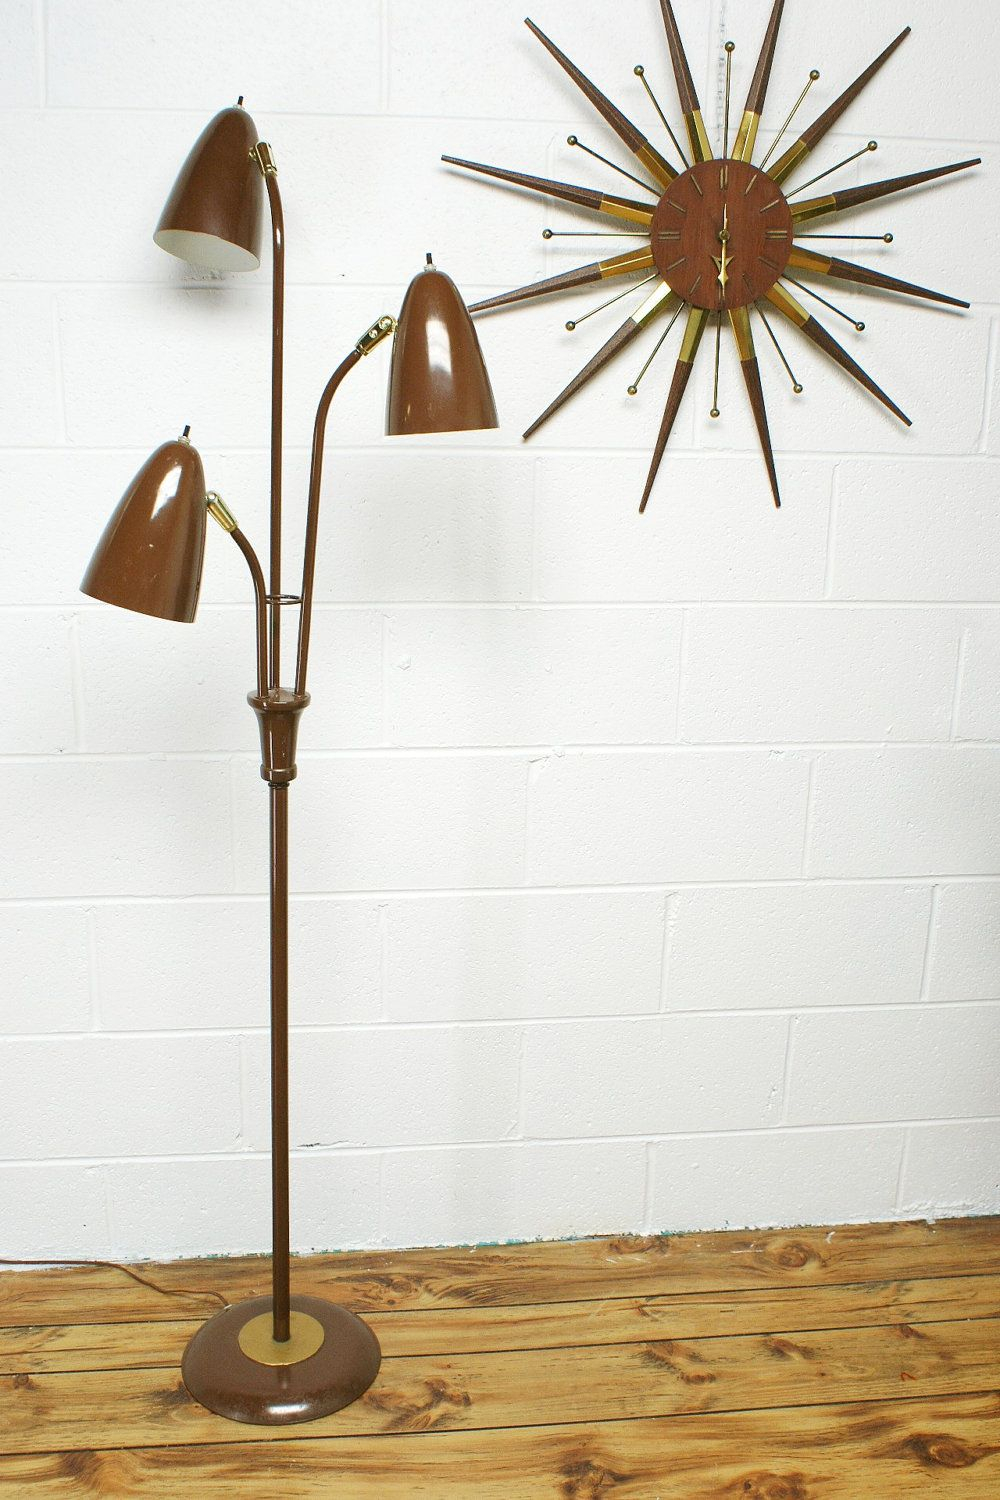 The Vintage Mid Century Modern Floor Lamp With 3 Lights Ha regarding dimensions 1000 X 1500